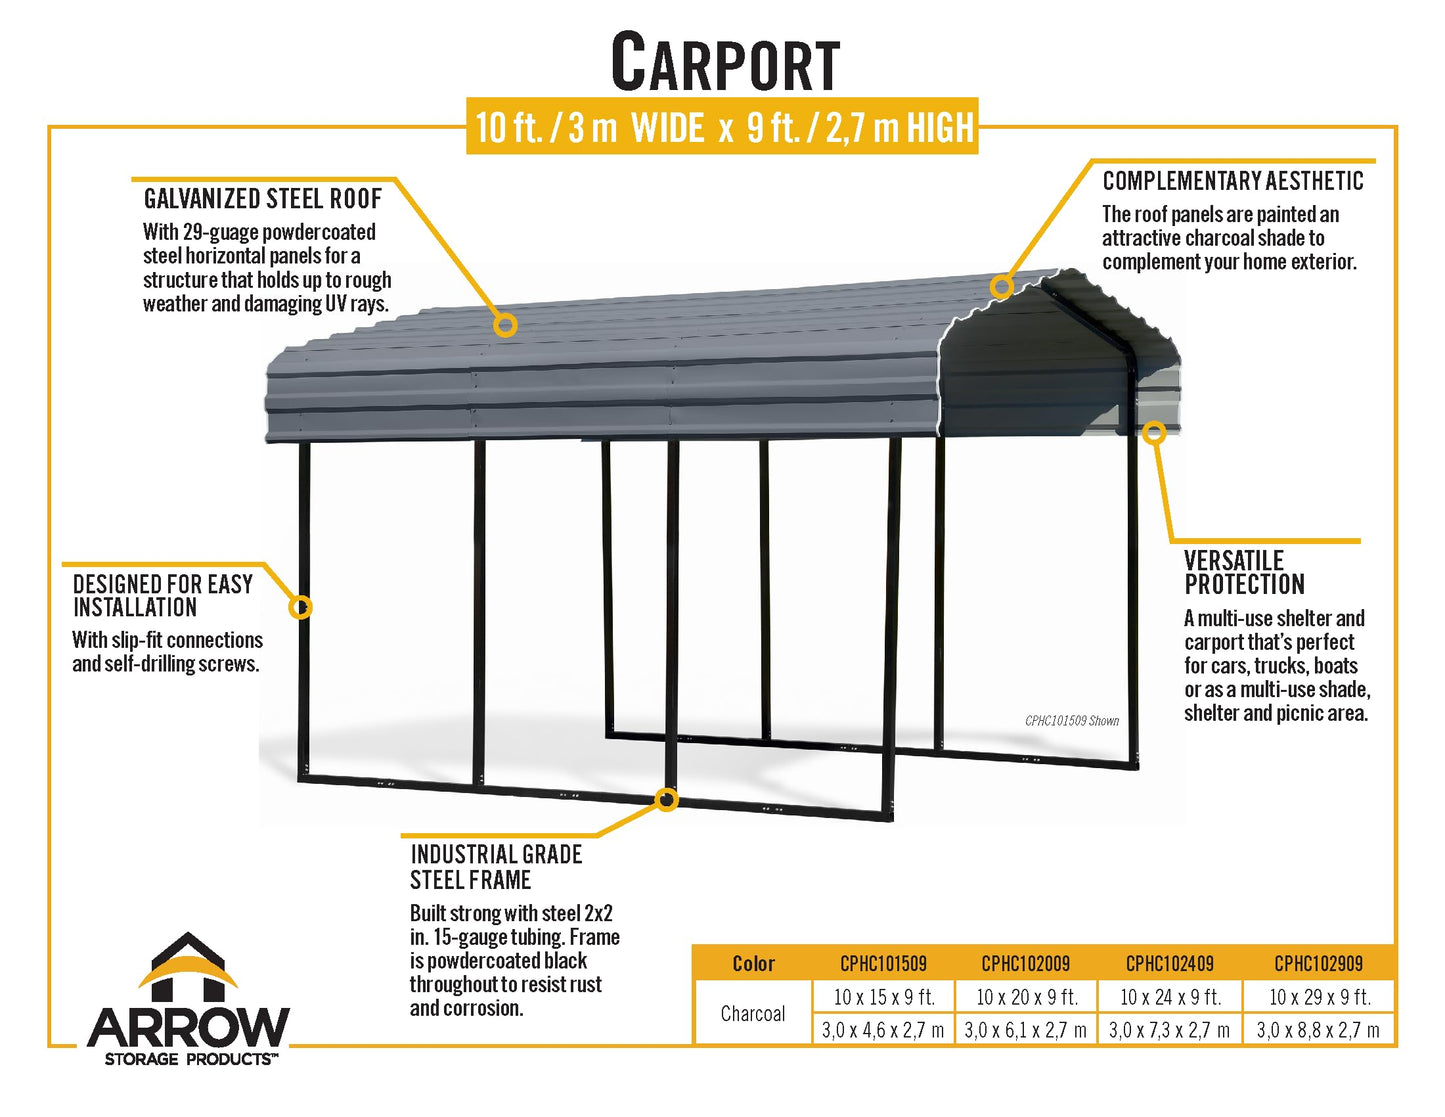 Arrow Carport, 10 ft. x 24 ft. x 9 ft. Charcoal 10' x 24' x 9'